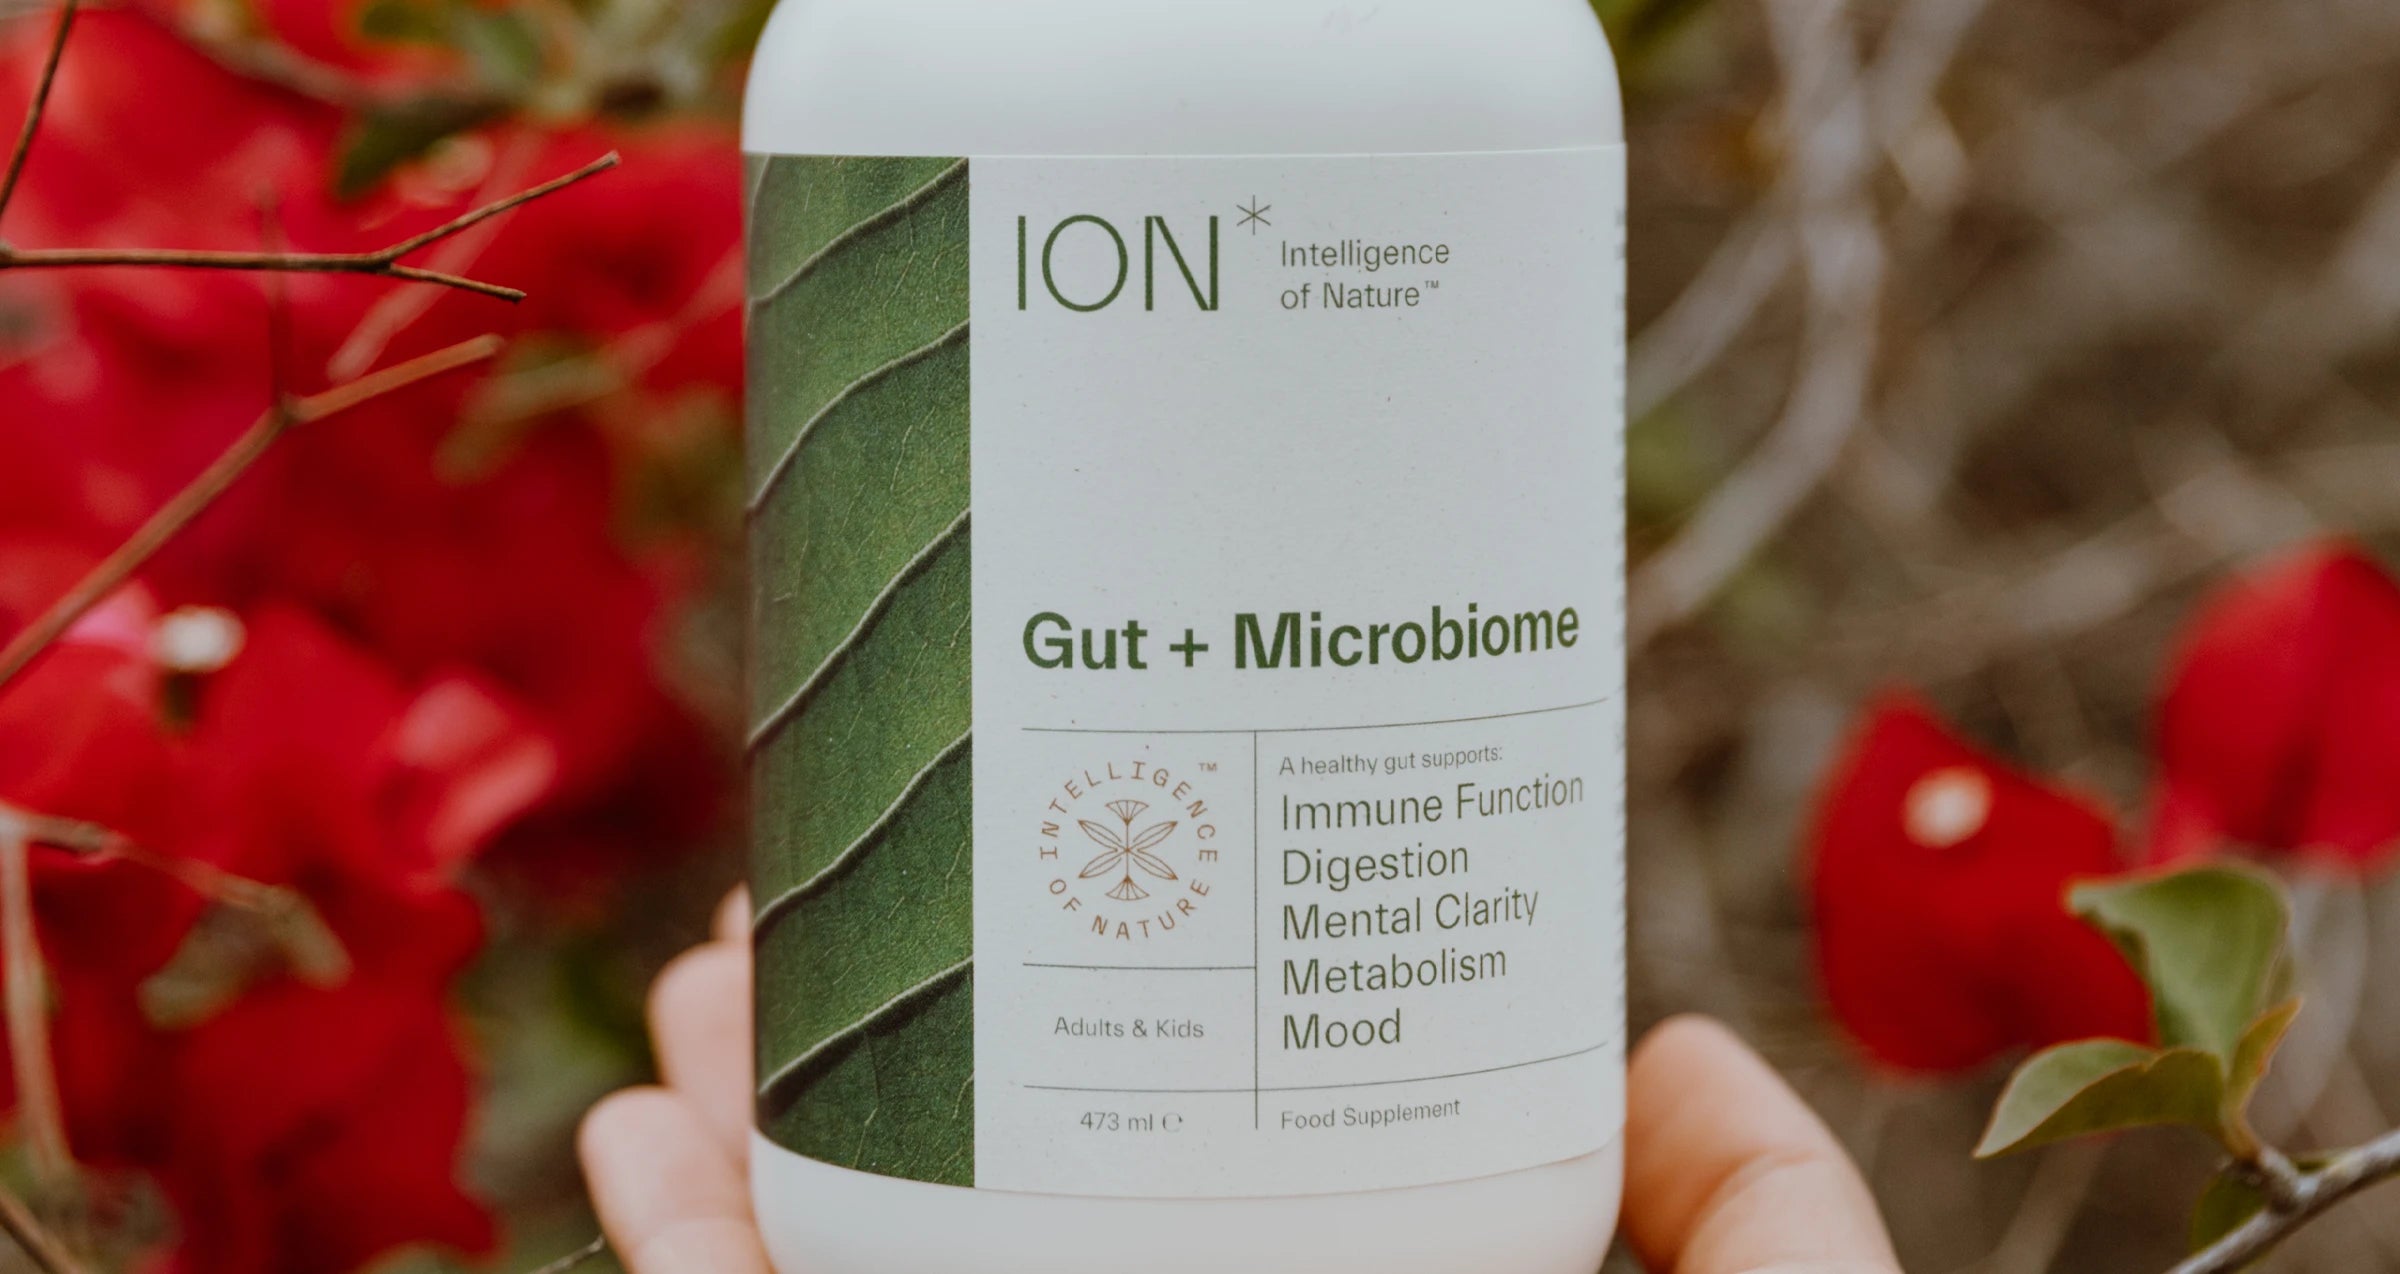 ION* Gut + Microbiome